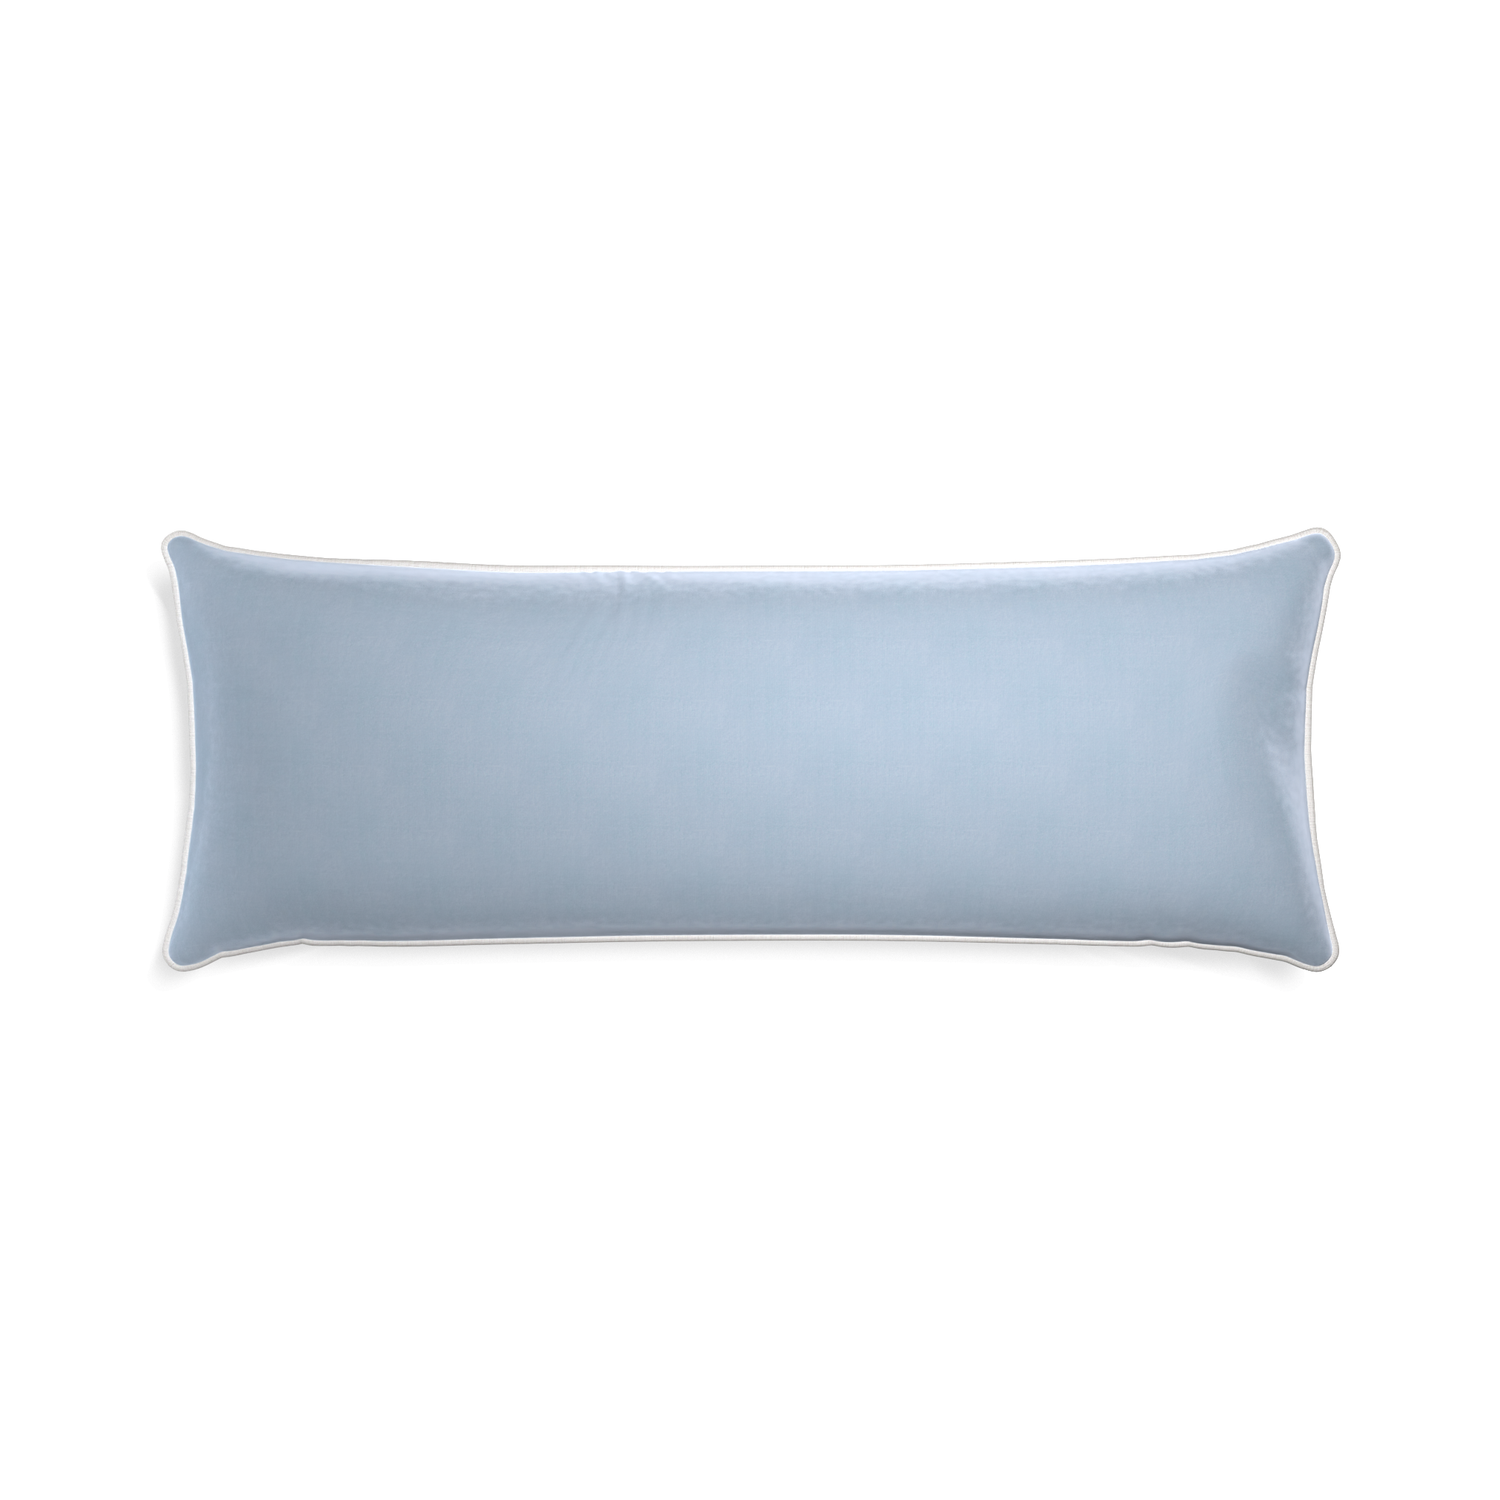 Xl-lumbar sky velvet custom pillow with snow piping on white background